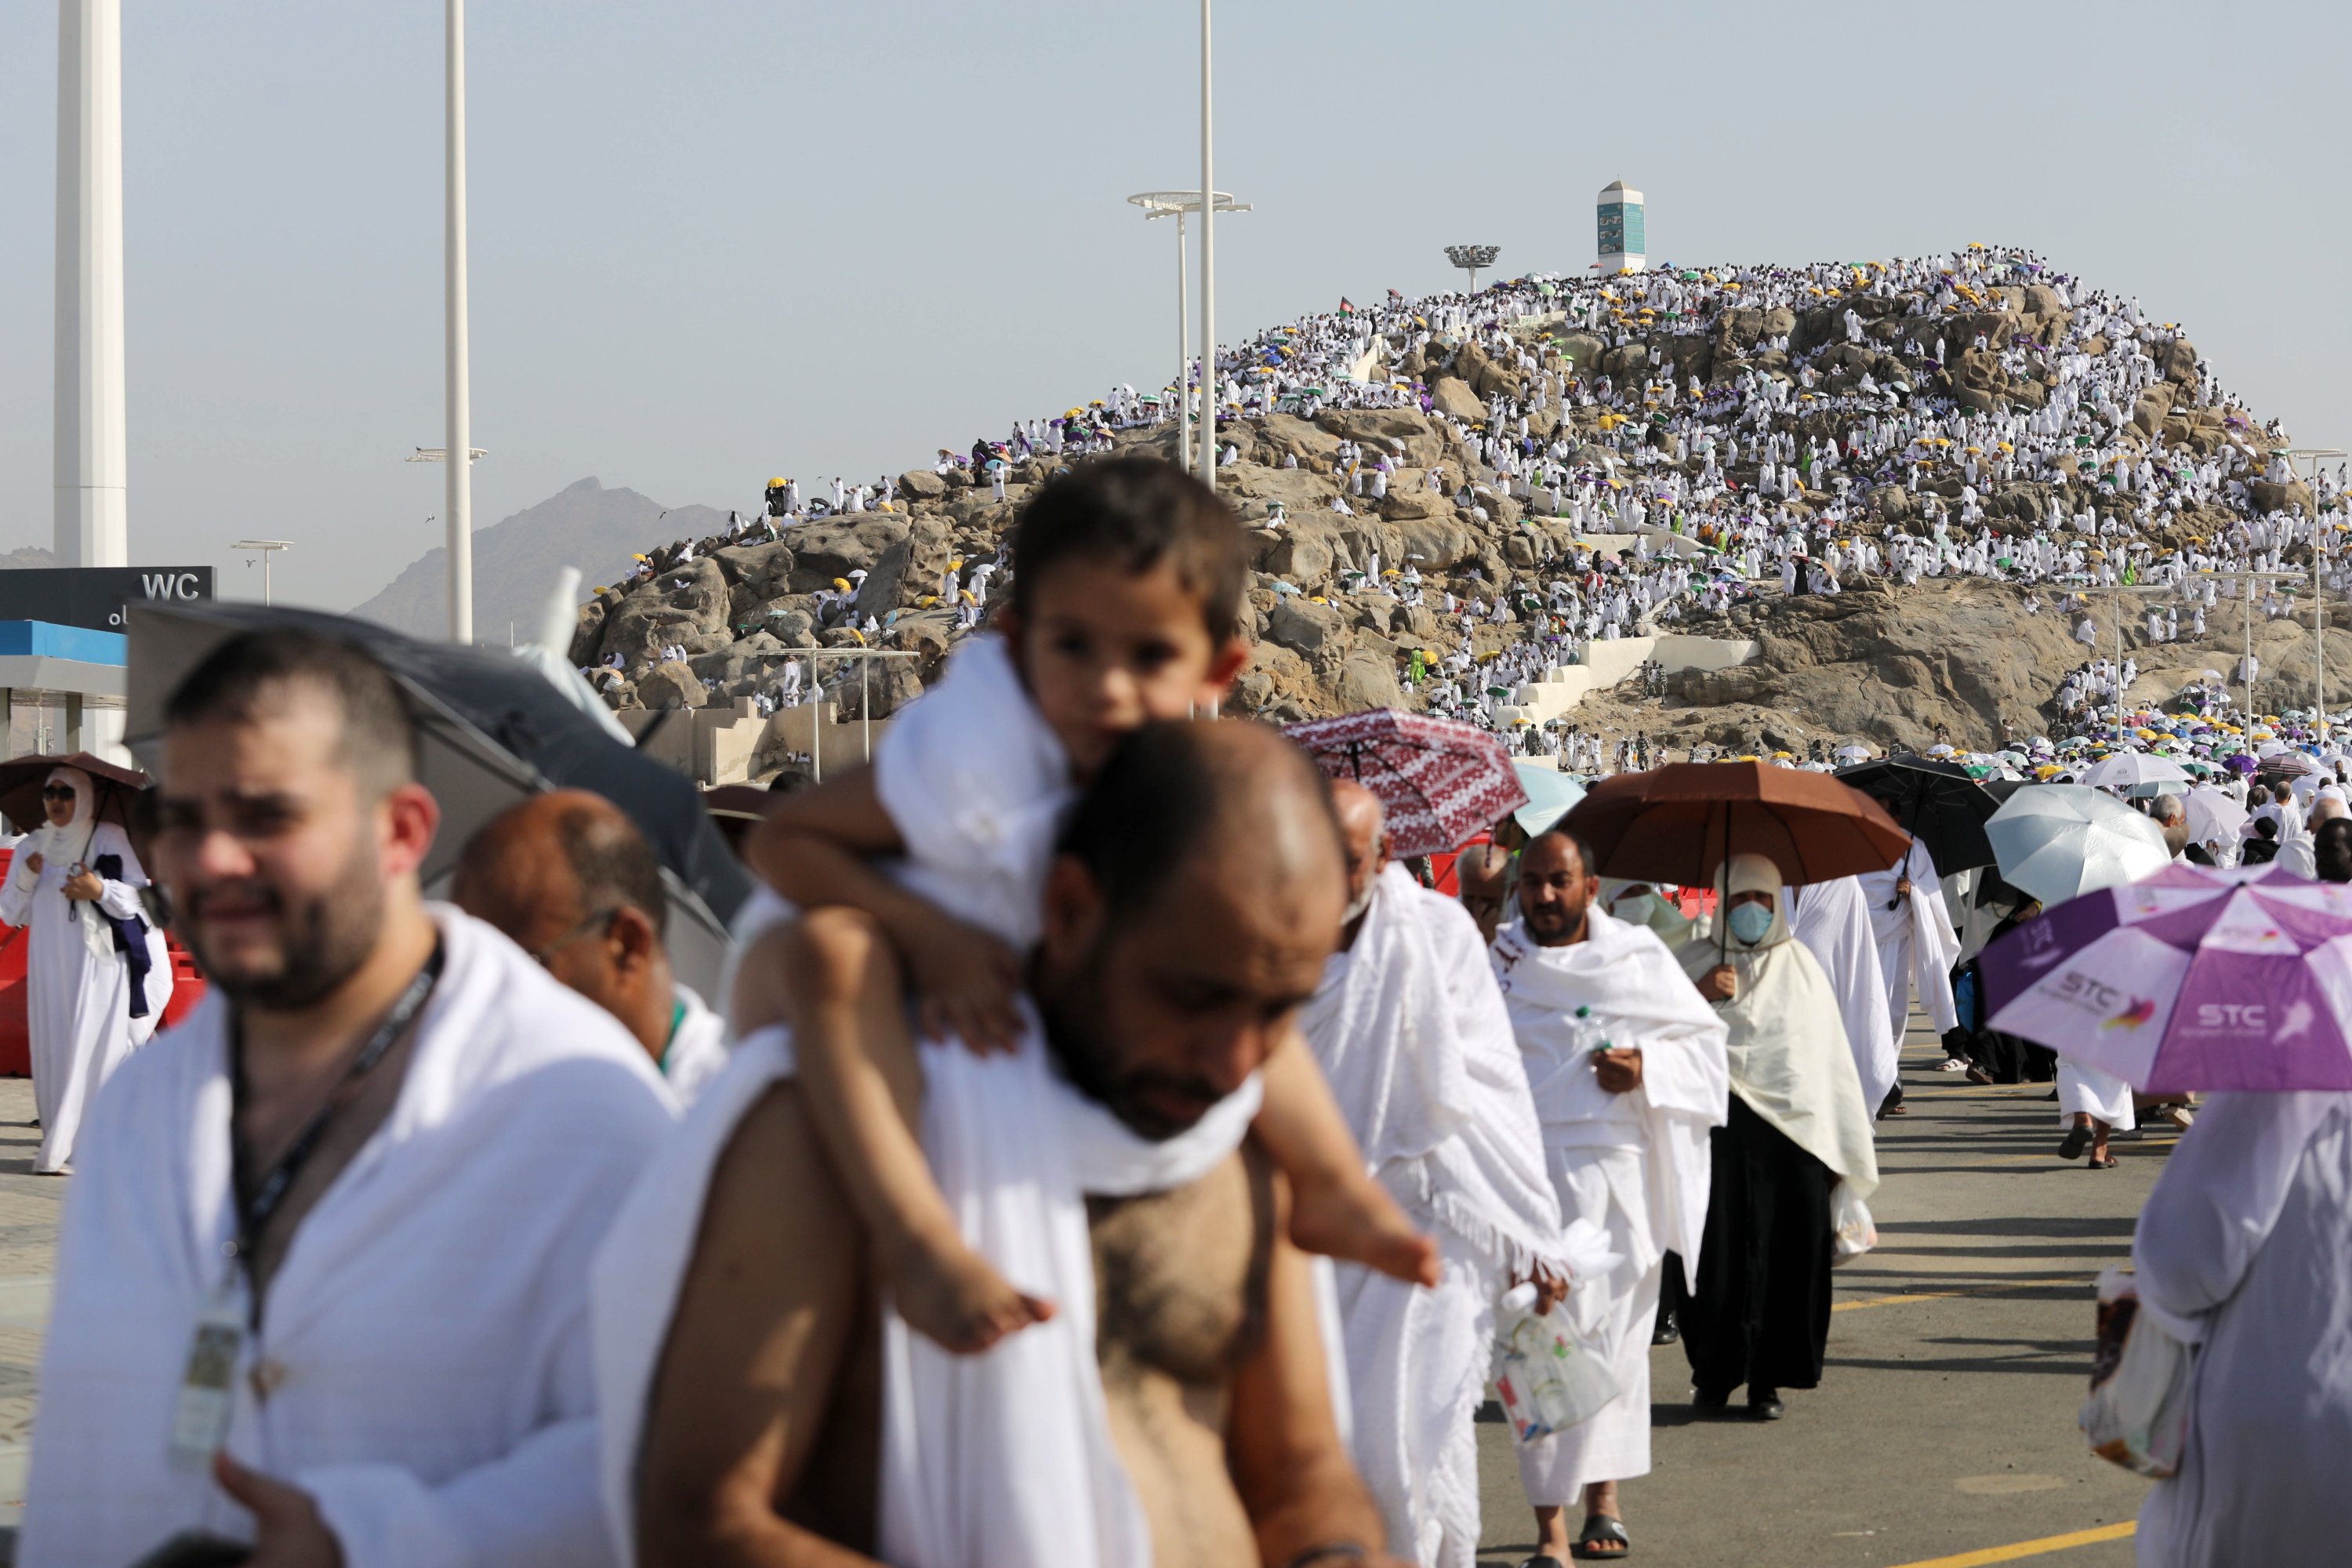 Millions of Muslim pilgrims converge on Mt. Arafat in hajj climax